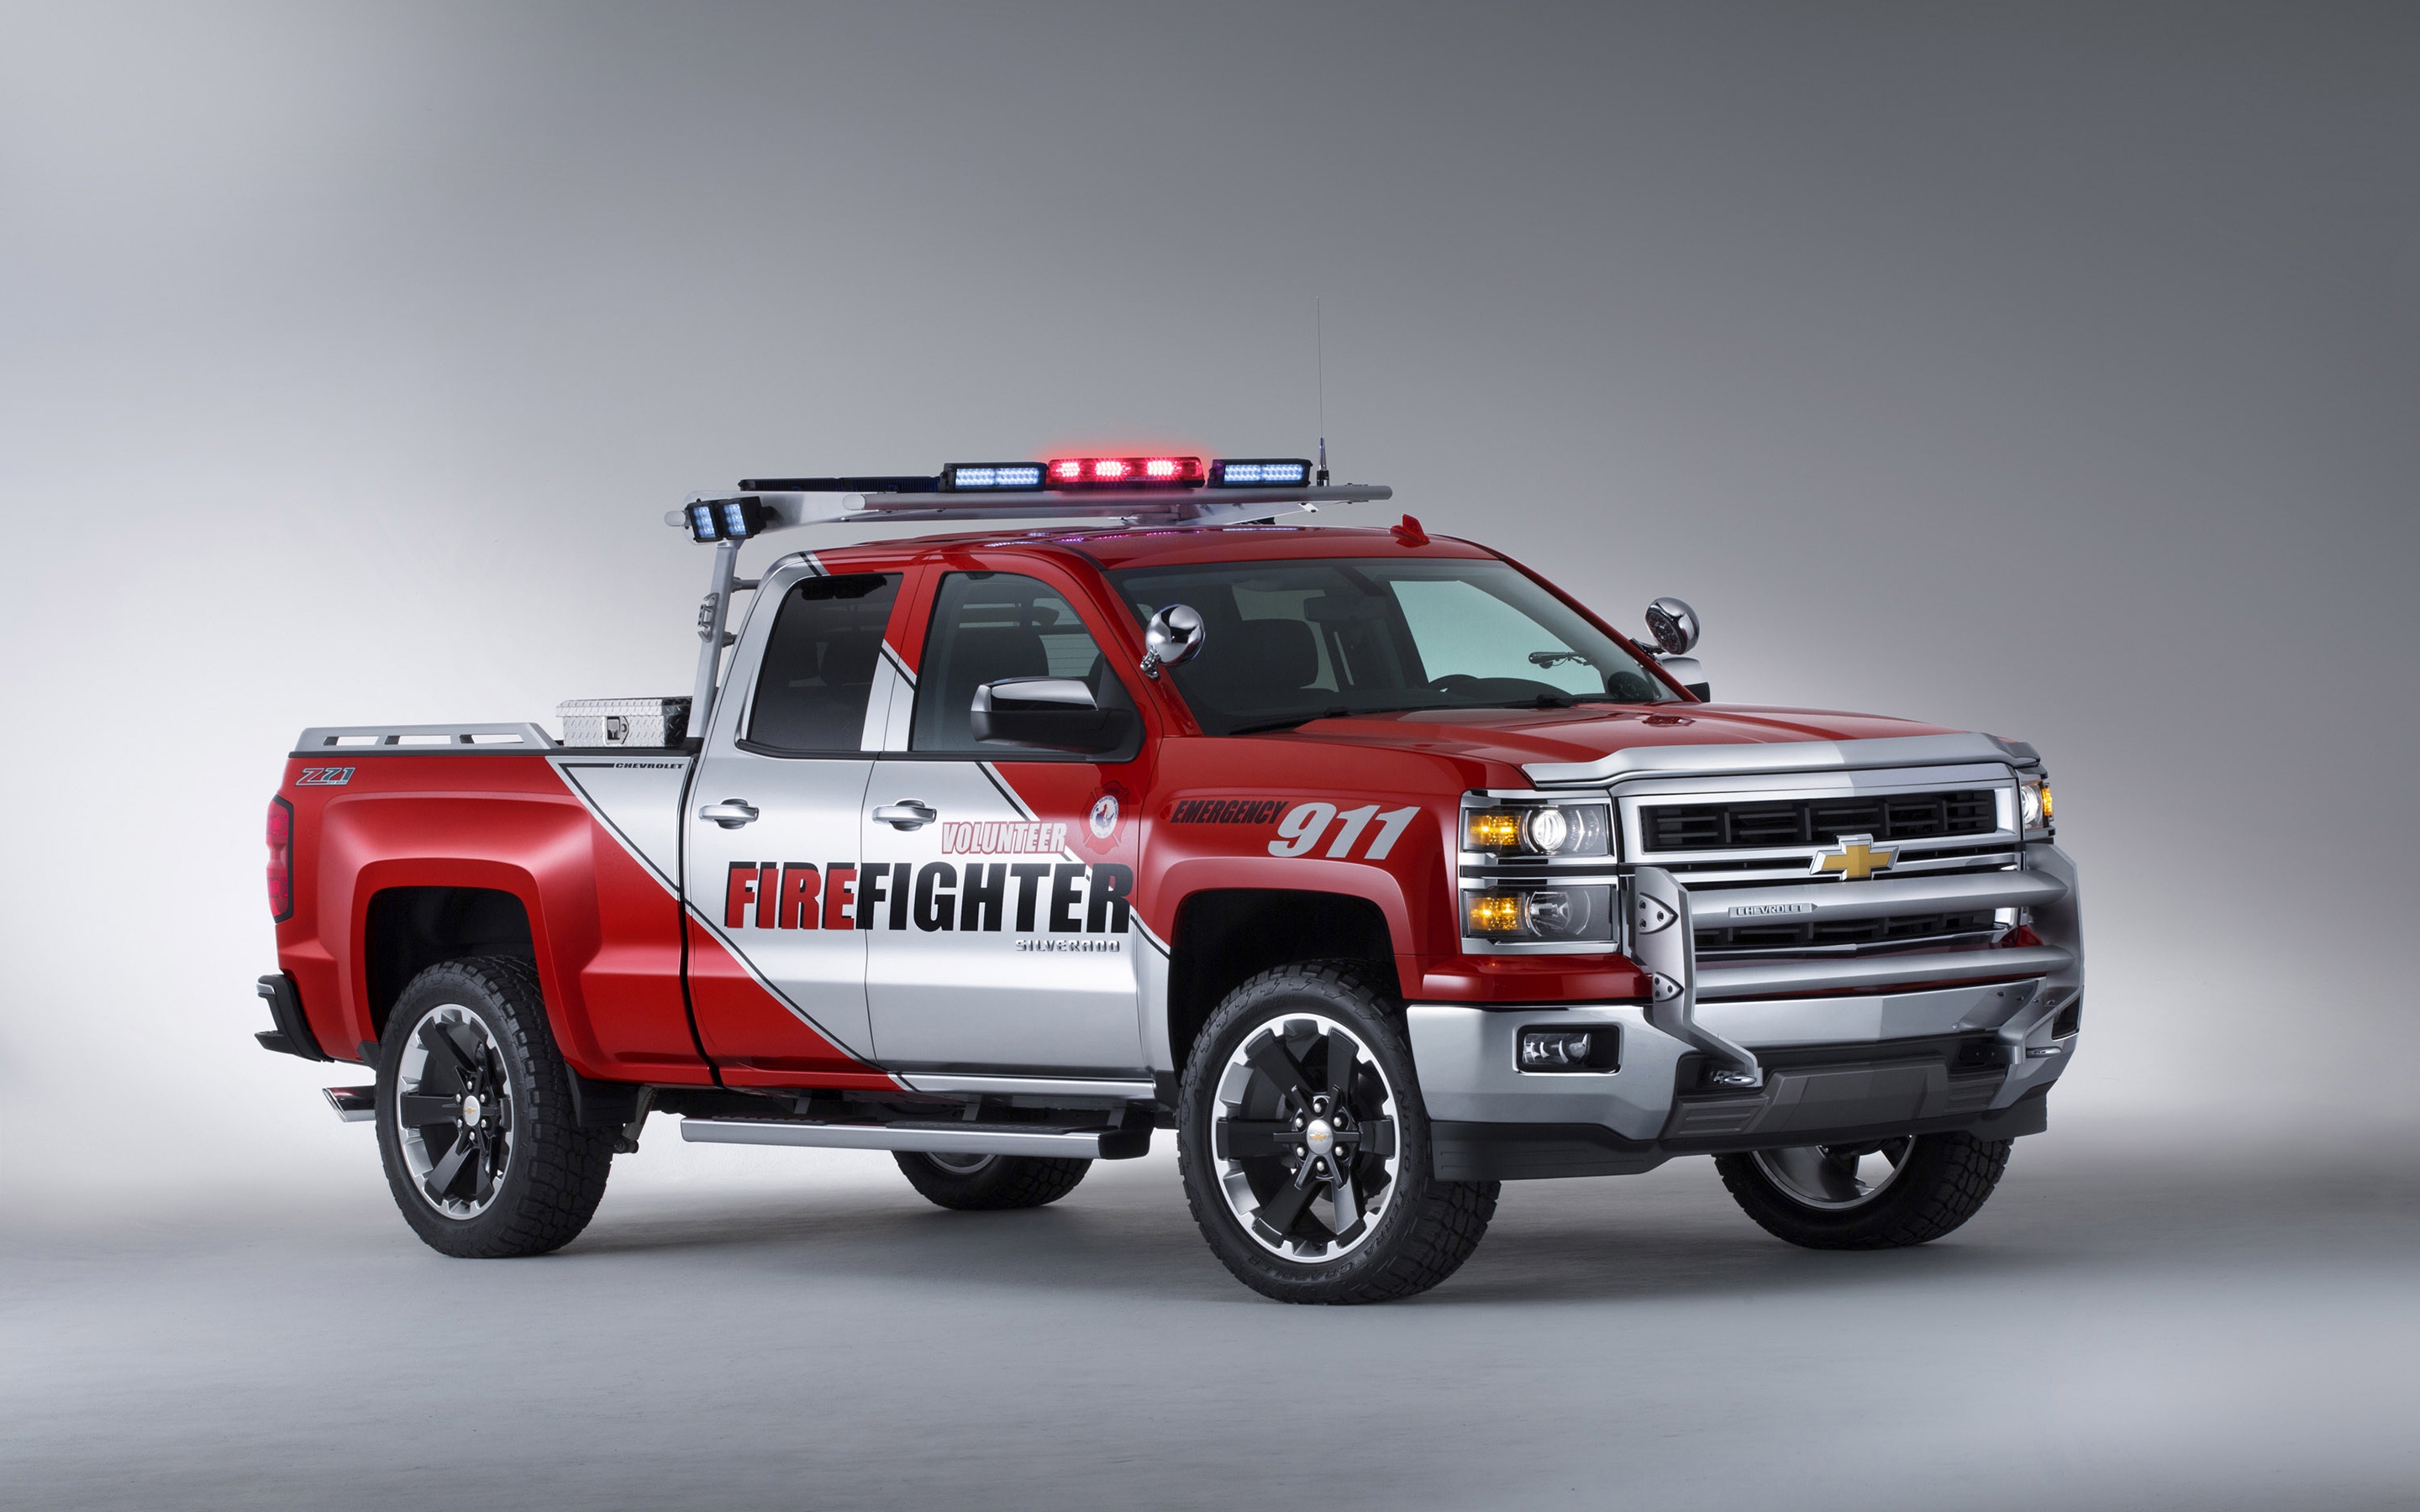 Chevrolet Silverado Volunteer Firefighters Concept for 2880 x 1800 Retina Display resolution